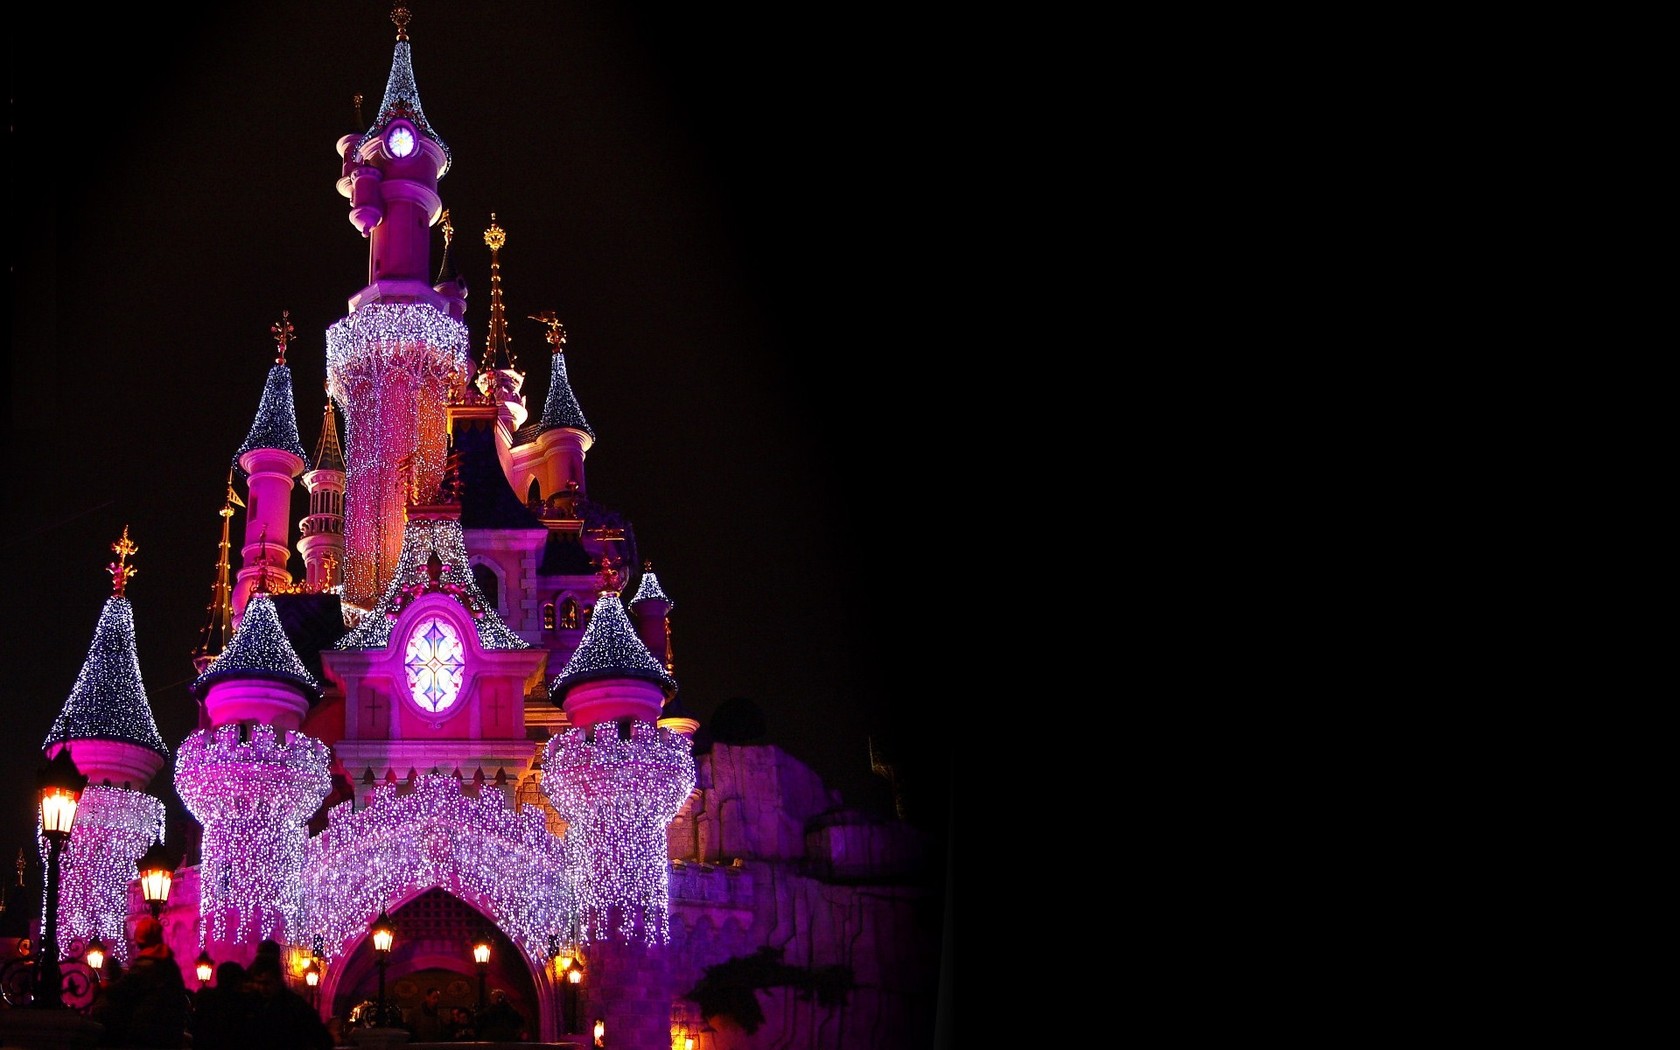 Download Cinderella Castle   Walt Disney World wallpaper